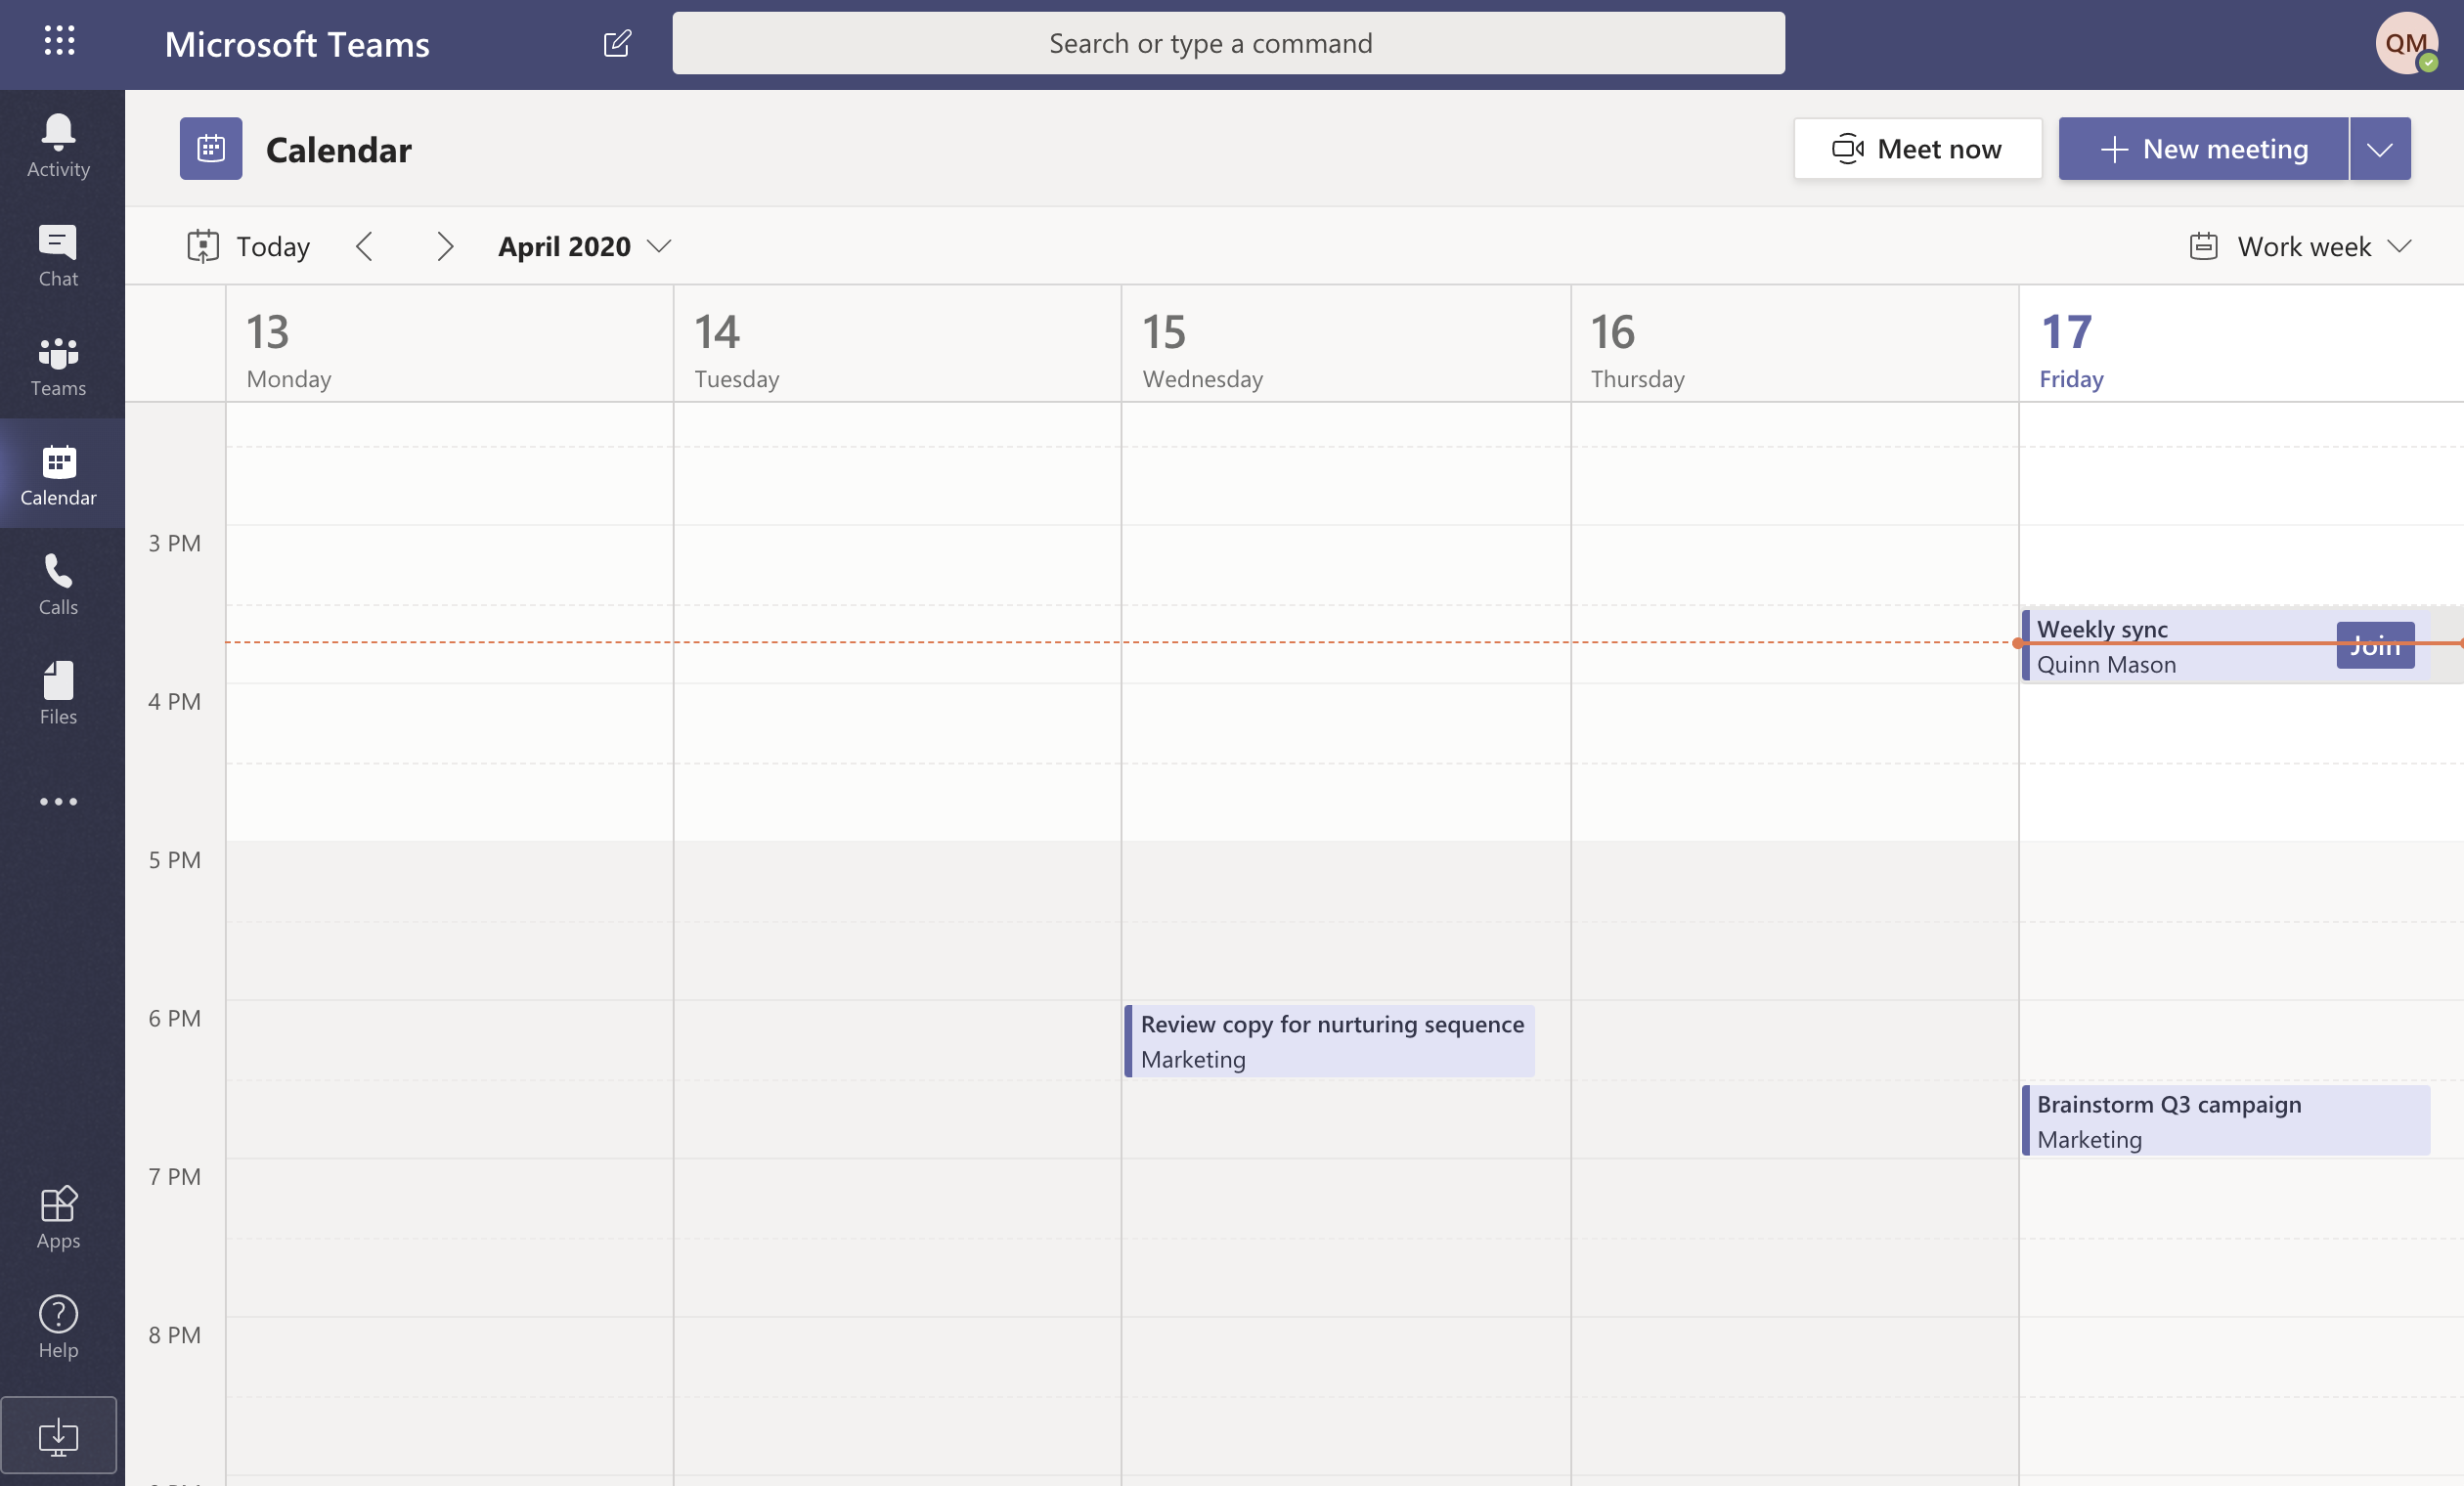 Calendar in Teams syncs with Outlook calendar.
